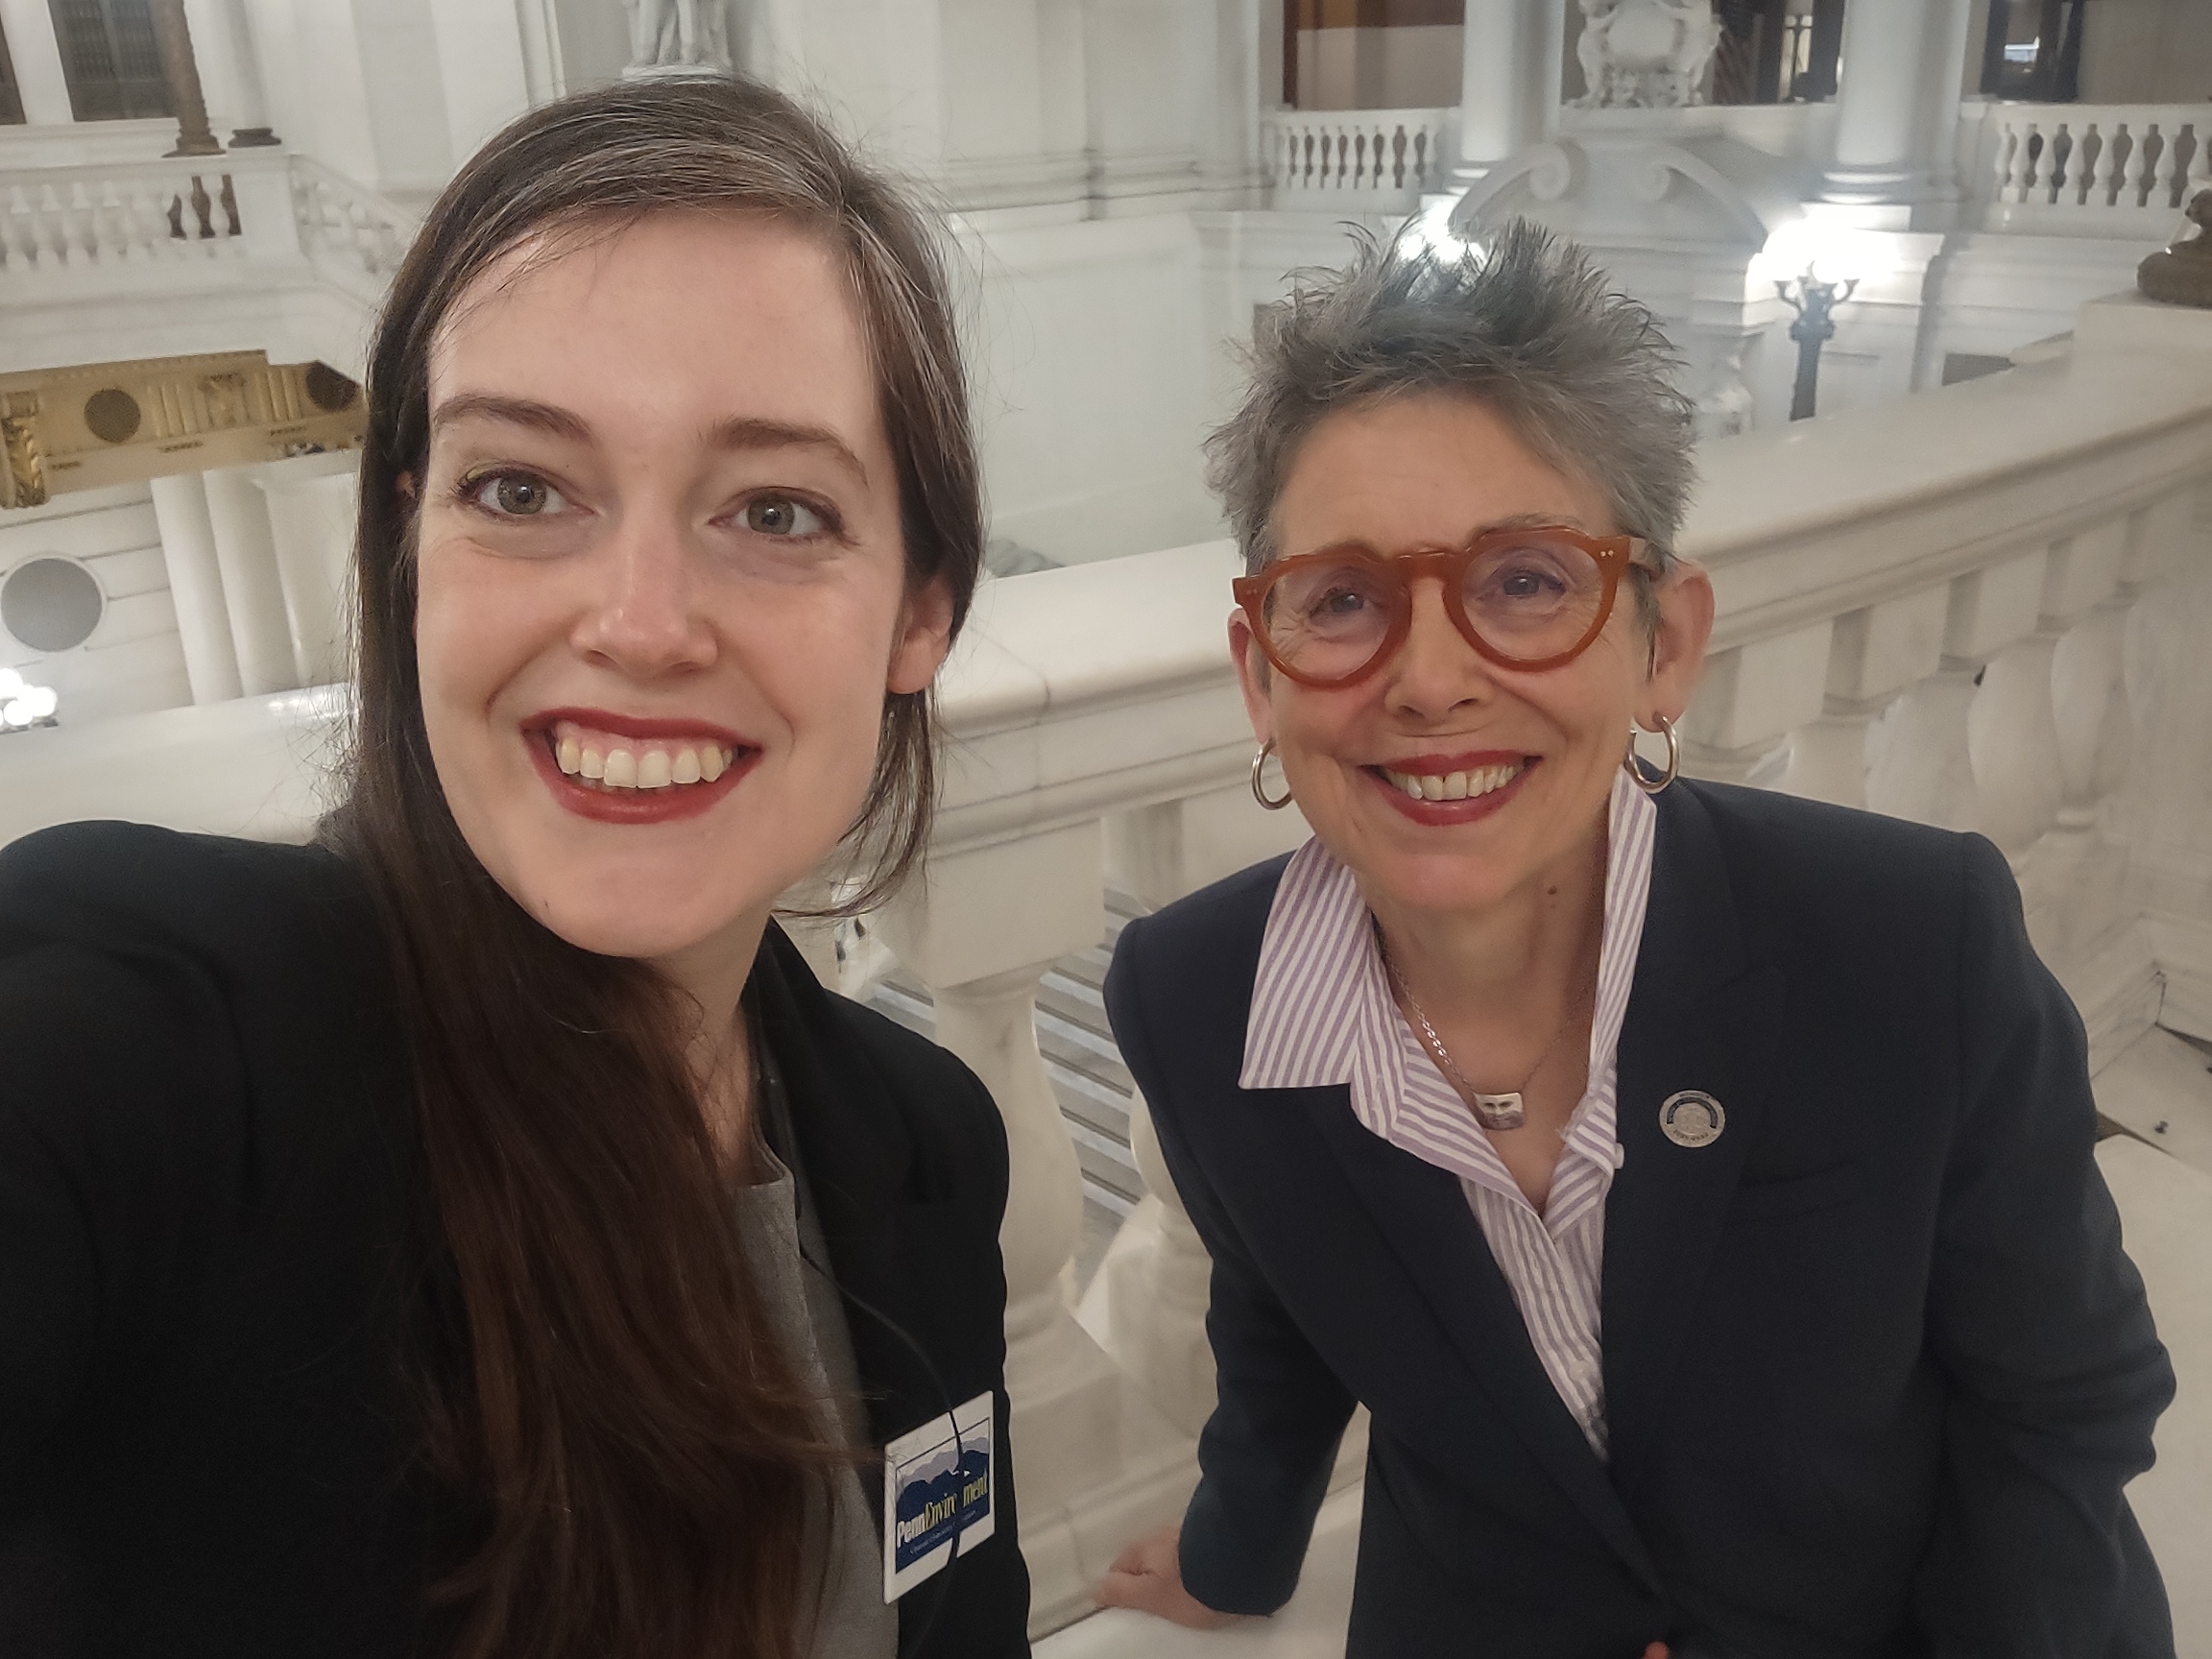 Representative Daley & Stephanie Wein smiling in a selfie in the PA Capitol Rotunda